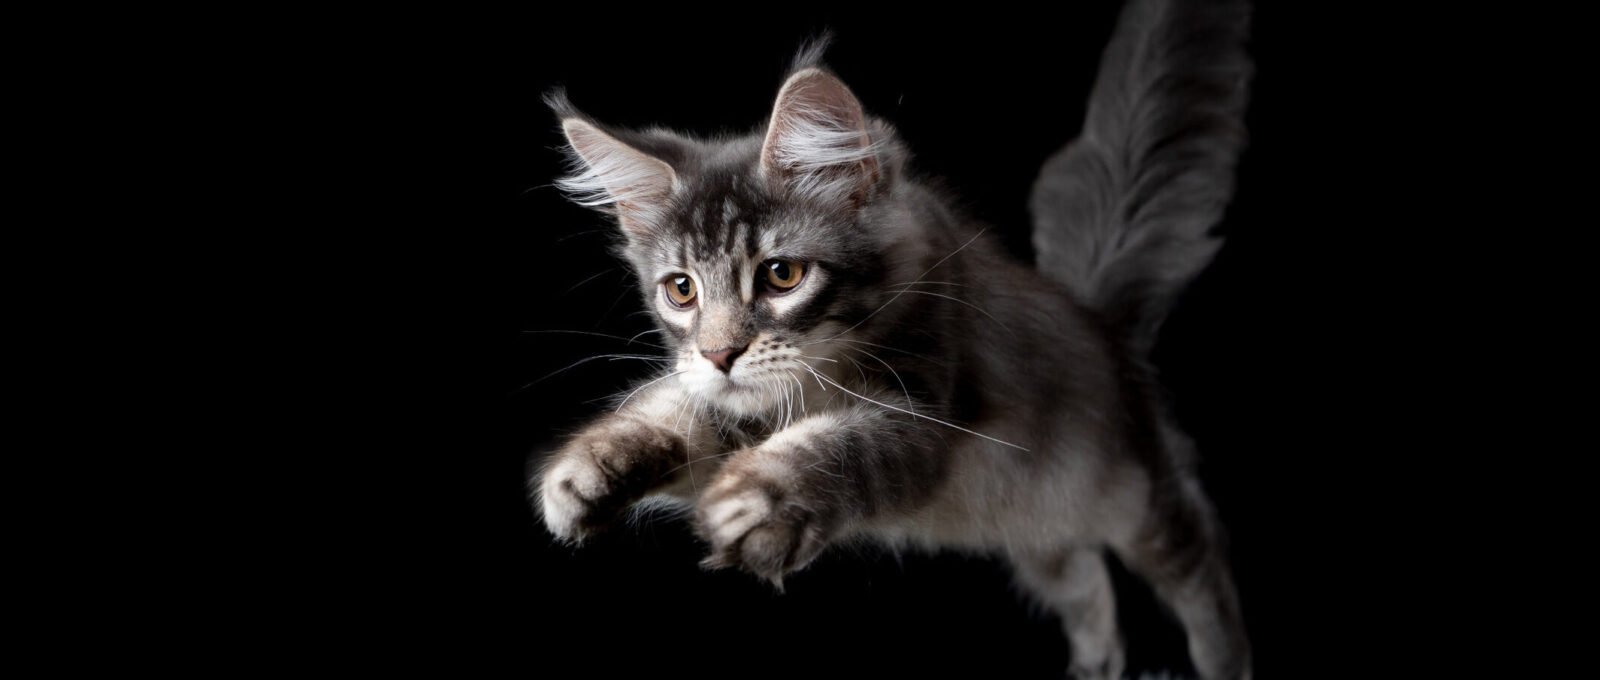 Main Coon kitten leaping - dark background